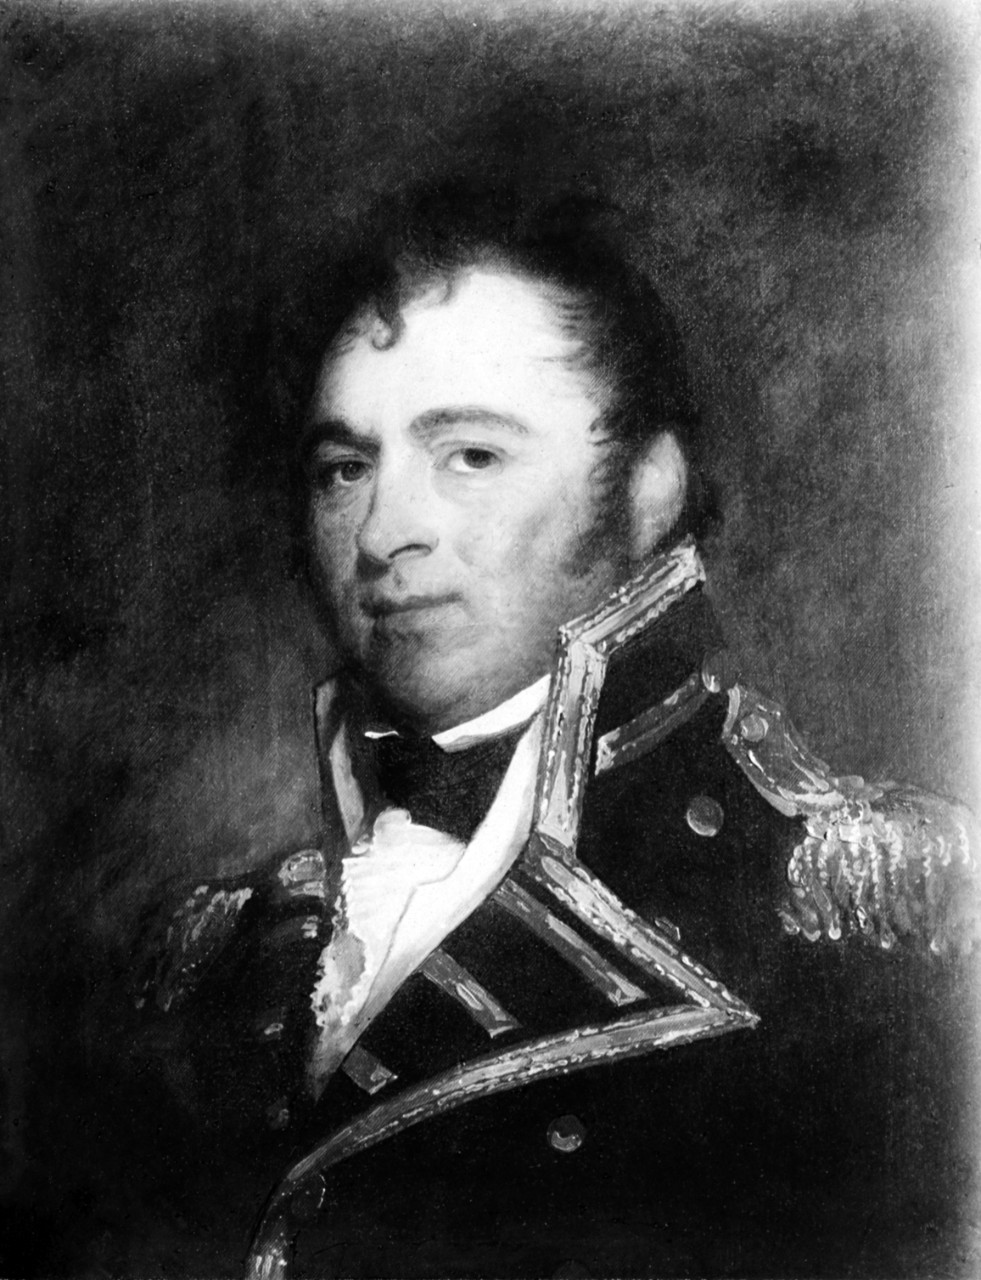 Photo #: NH 51624  Commodore Isaac Chauncey, USN (1772-1840)  